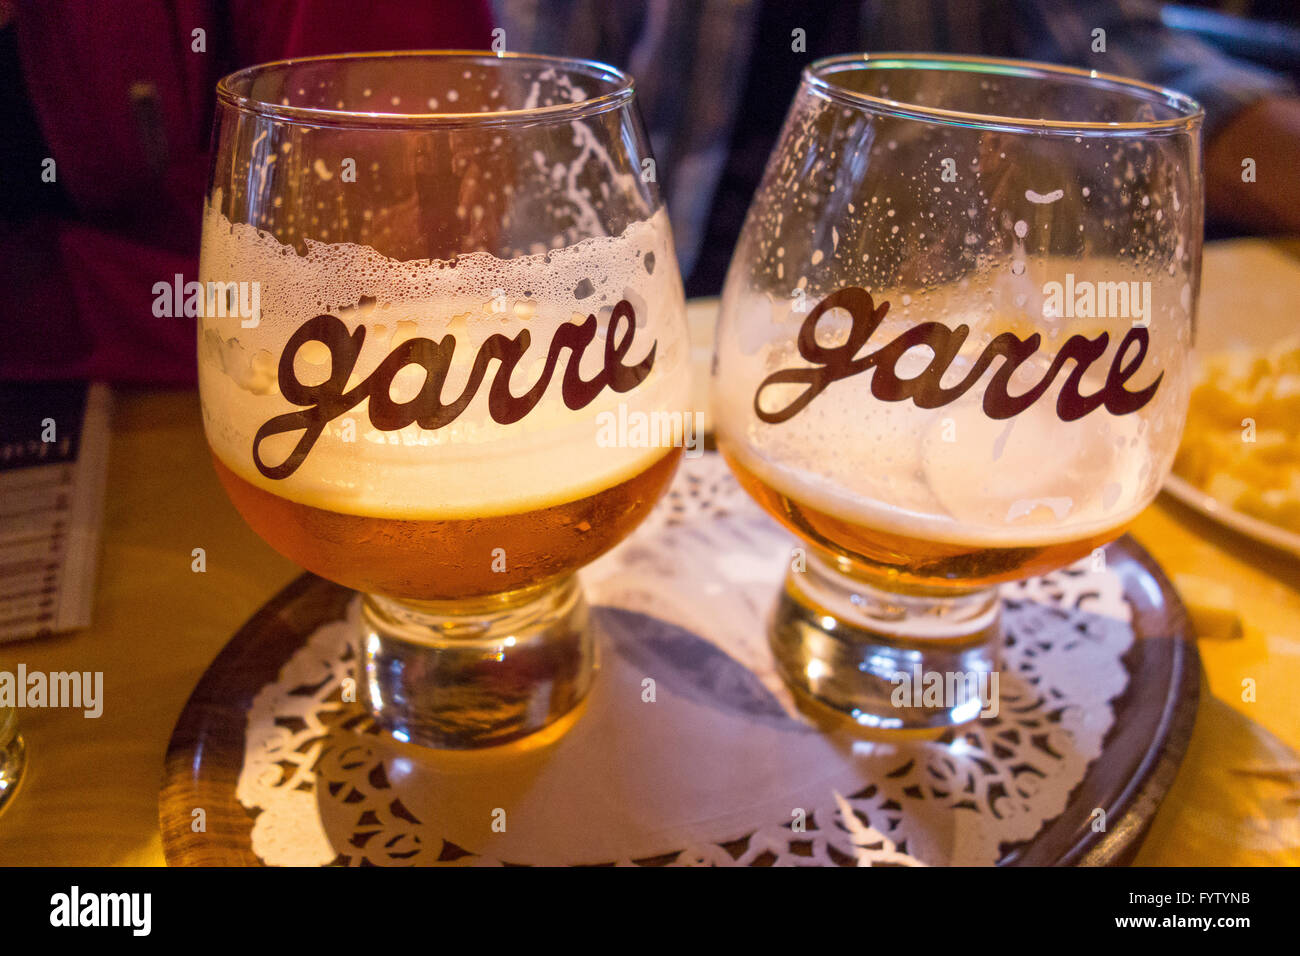 BRUGES, Belgio - due bicchieri di tripla De Garre birra della casa. Foto Stock